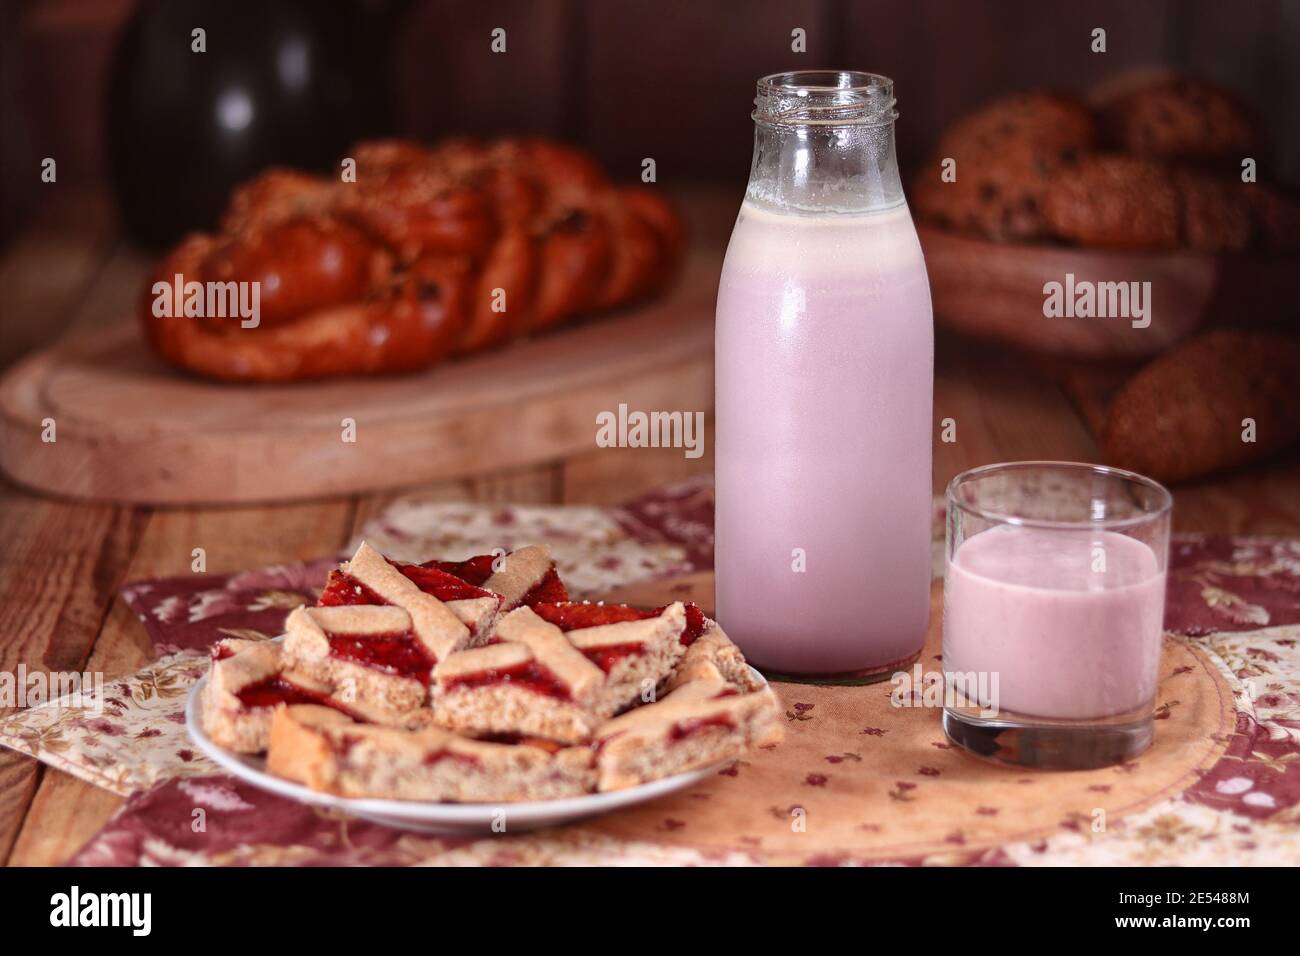 fruit milk drink in a bottle, glass, cake, still life Stock Photo